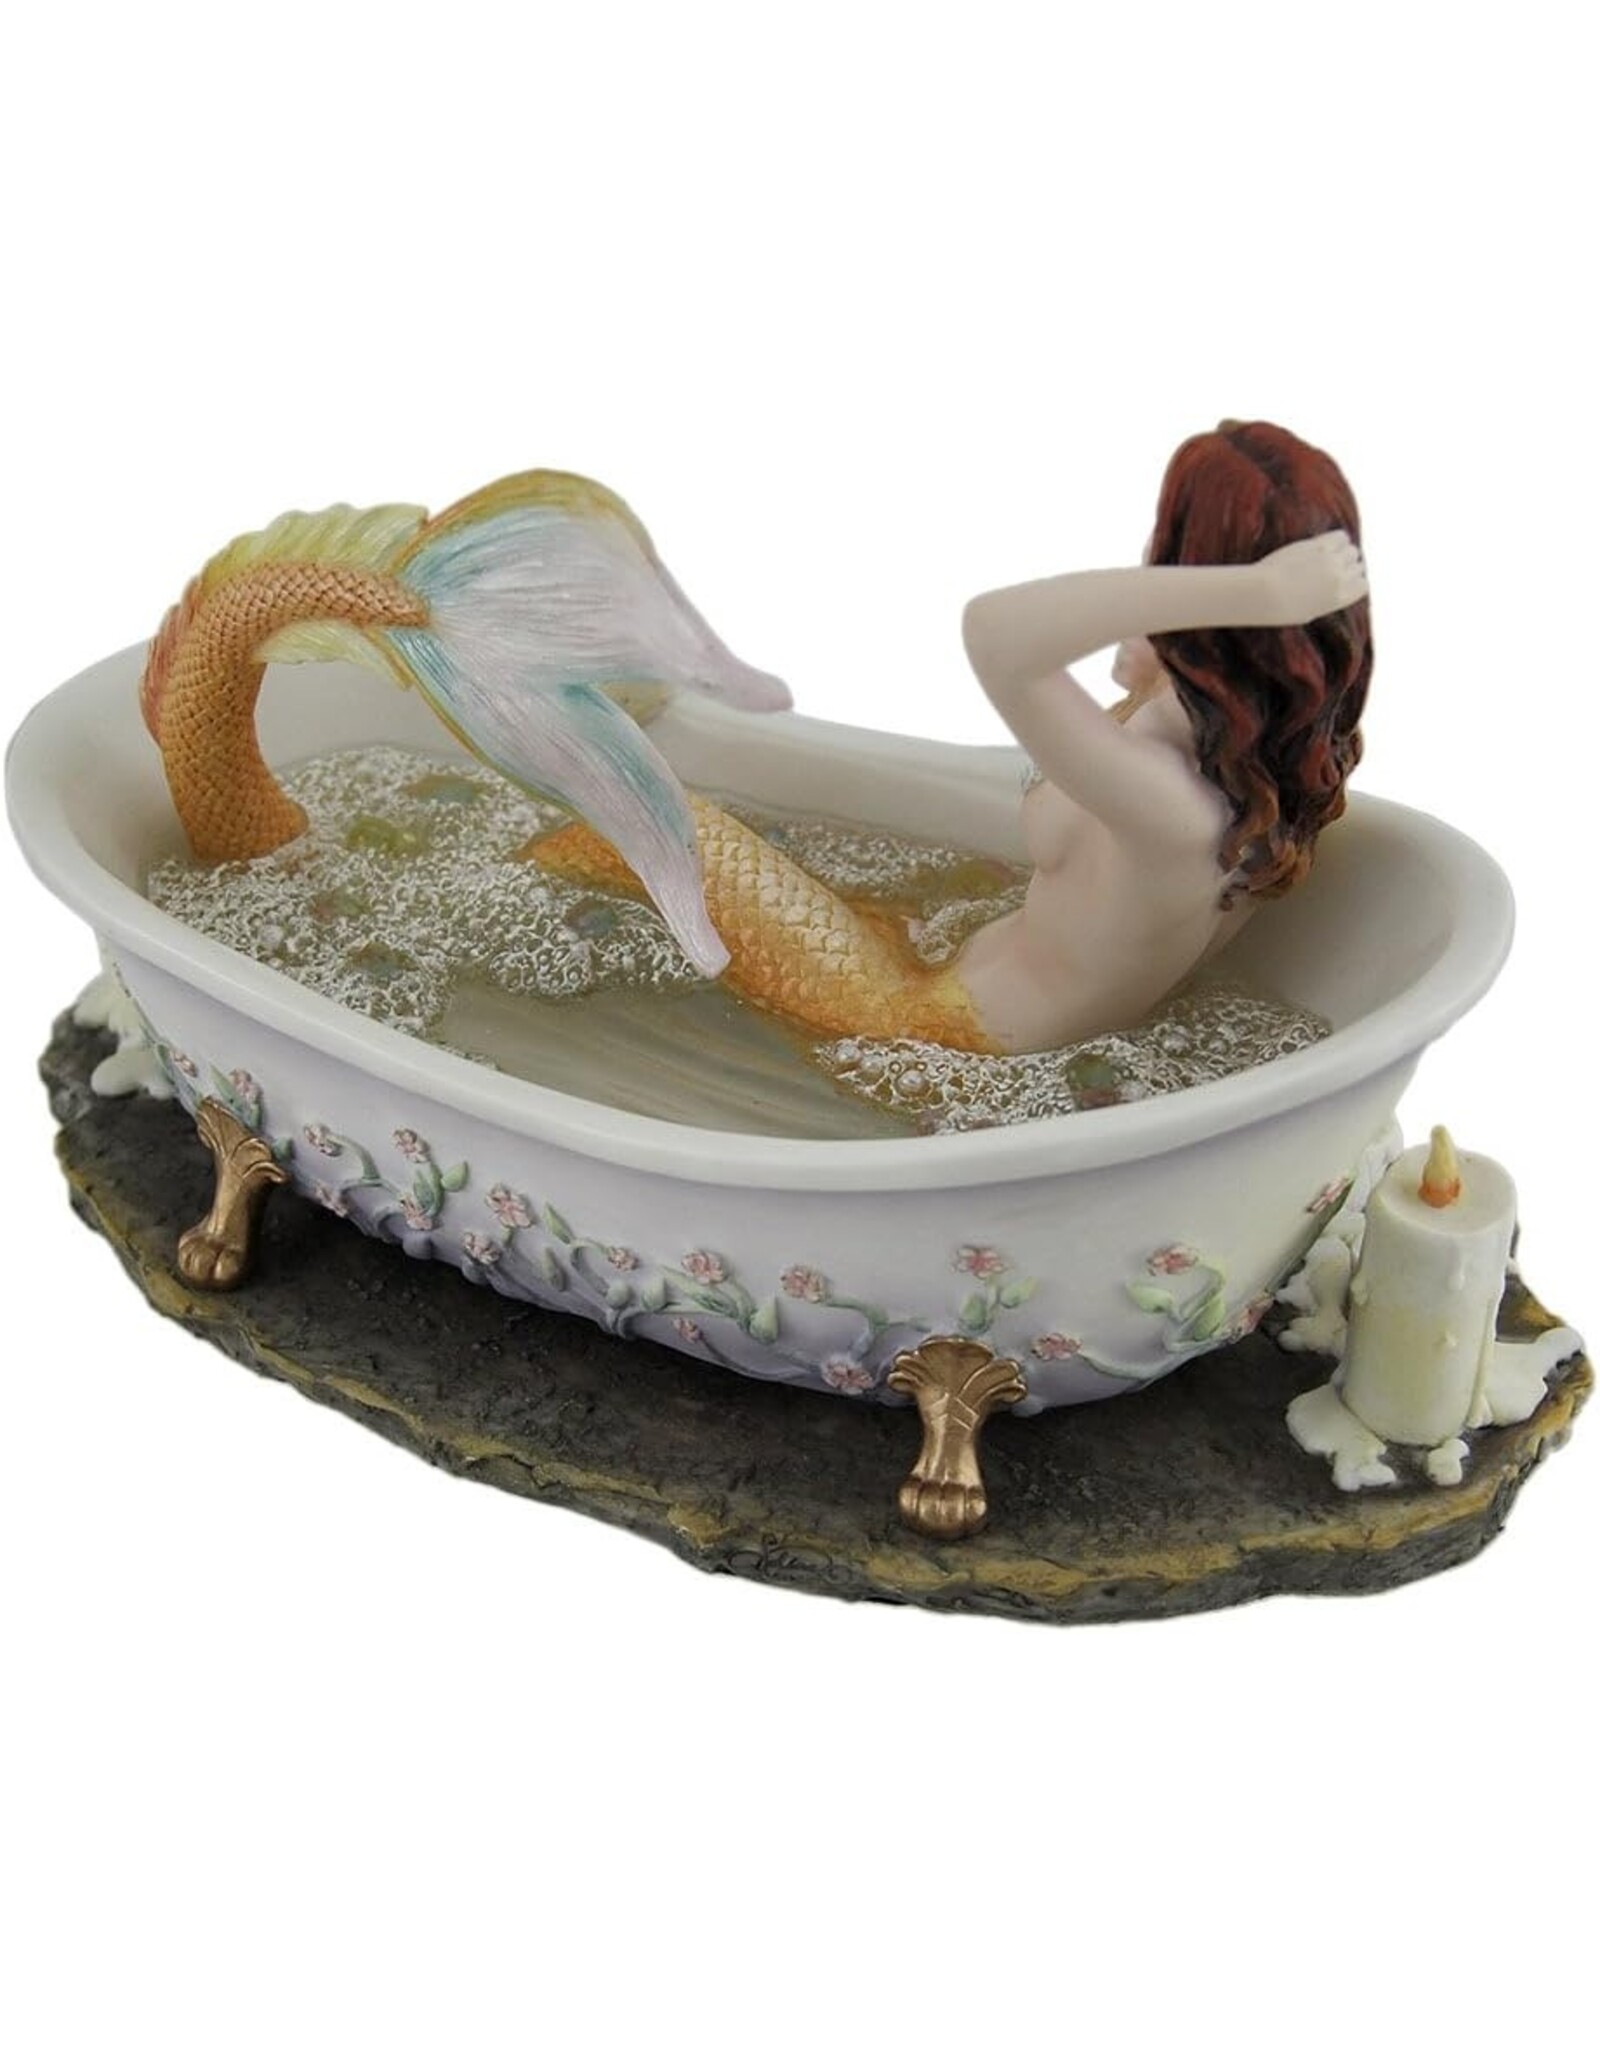 Veronese Design Giftware & Lifestyle - Bathtime by Selina Fenech - Mermaid in Bathtub